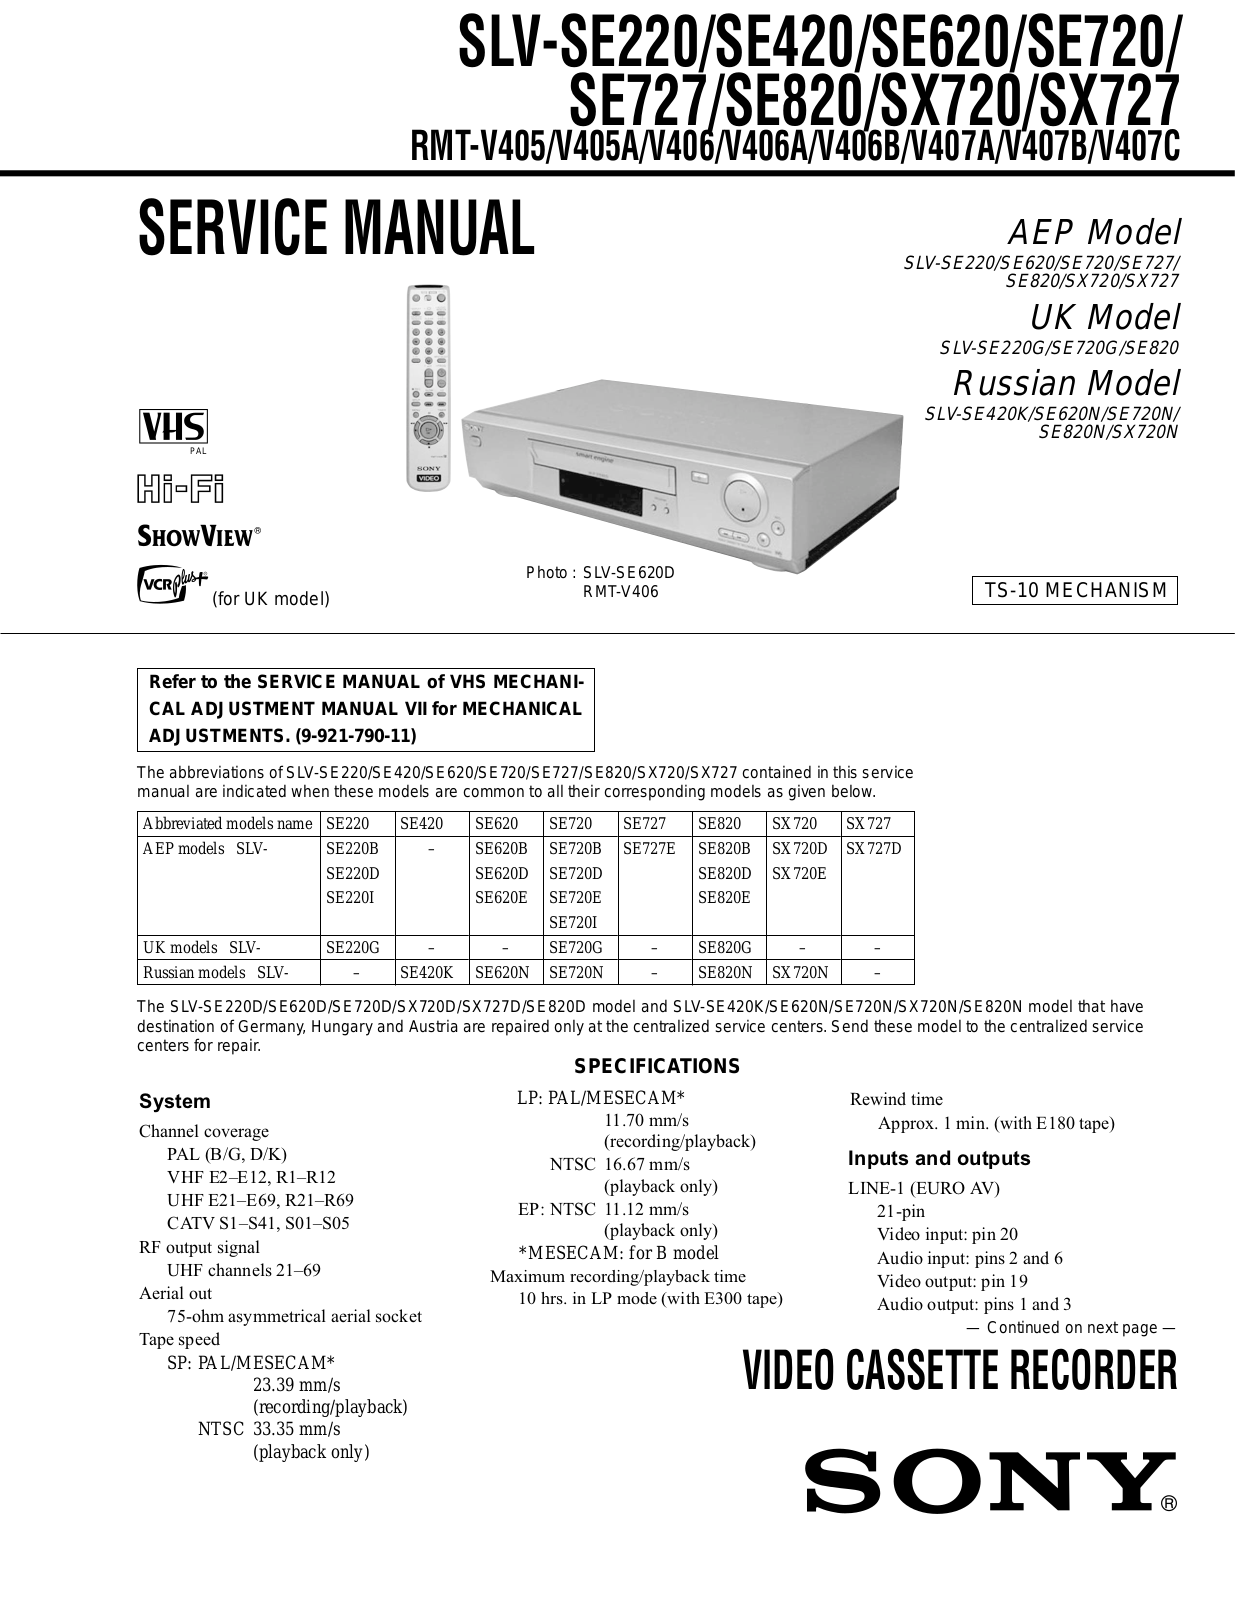 Sony SLV-SE220B, SLV-SE220D, SLV-SE220G, SLV-SE220I, SLV-SE420K Service Manual